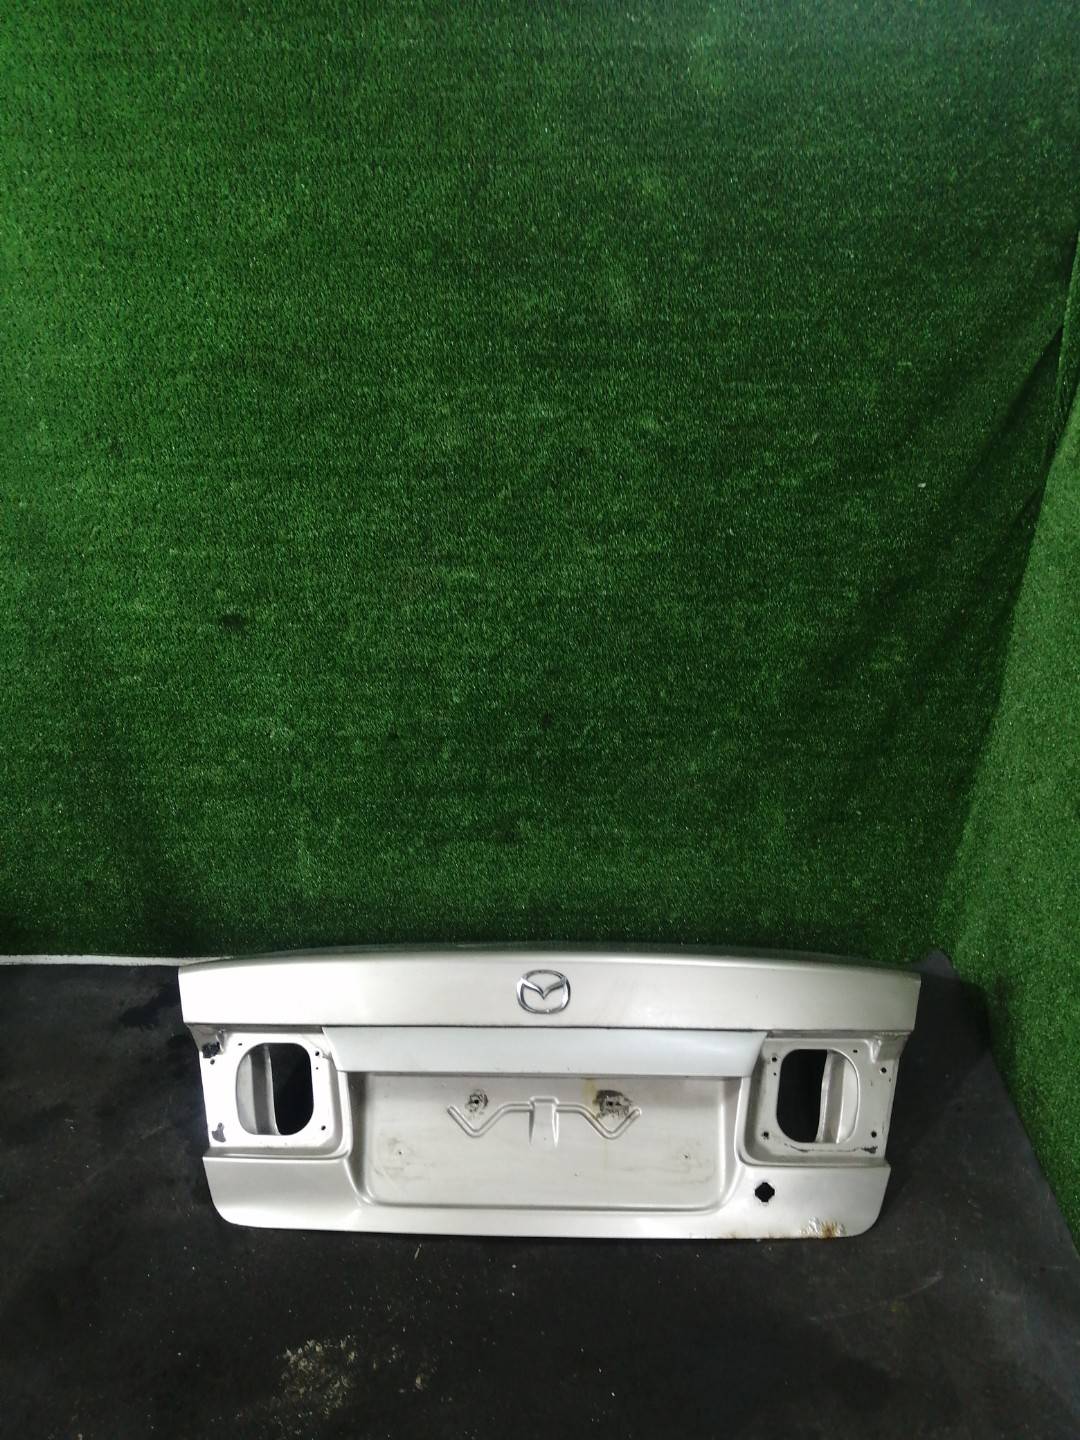 Крышка багажника - Mazda 626 (1997-2001)